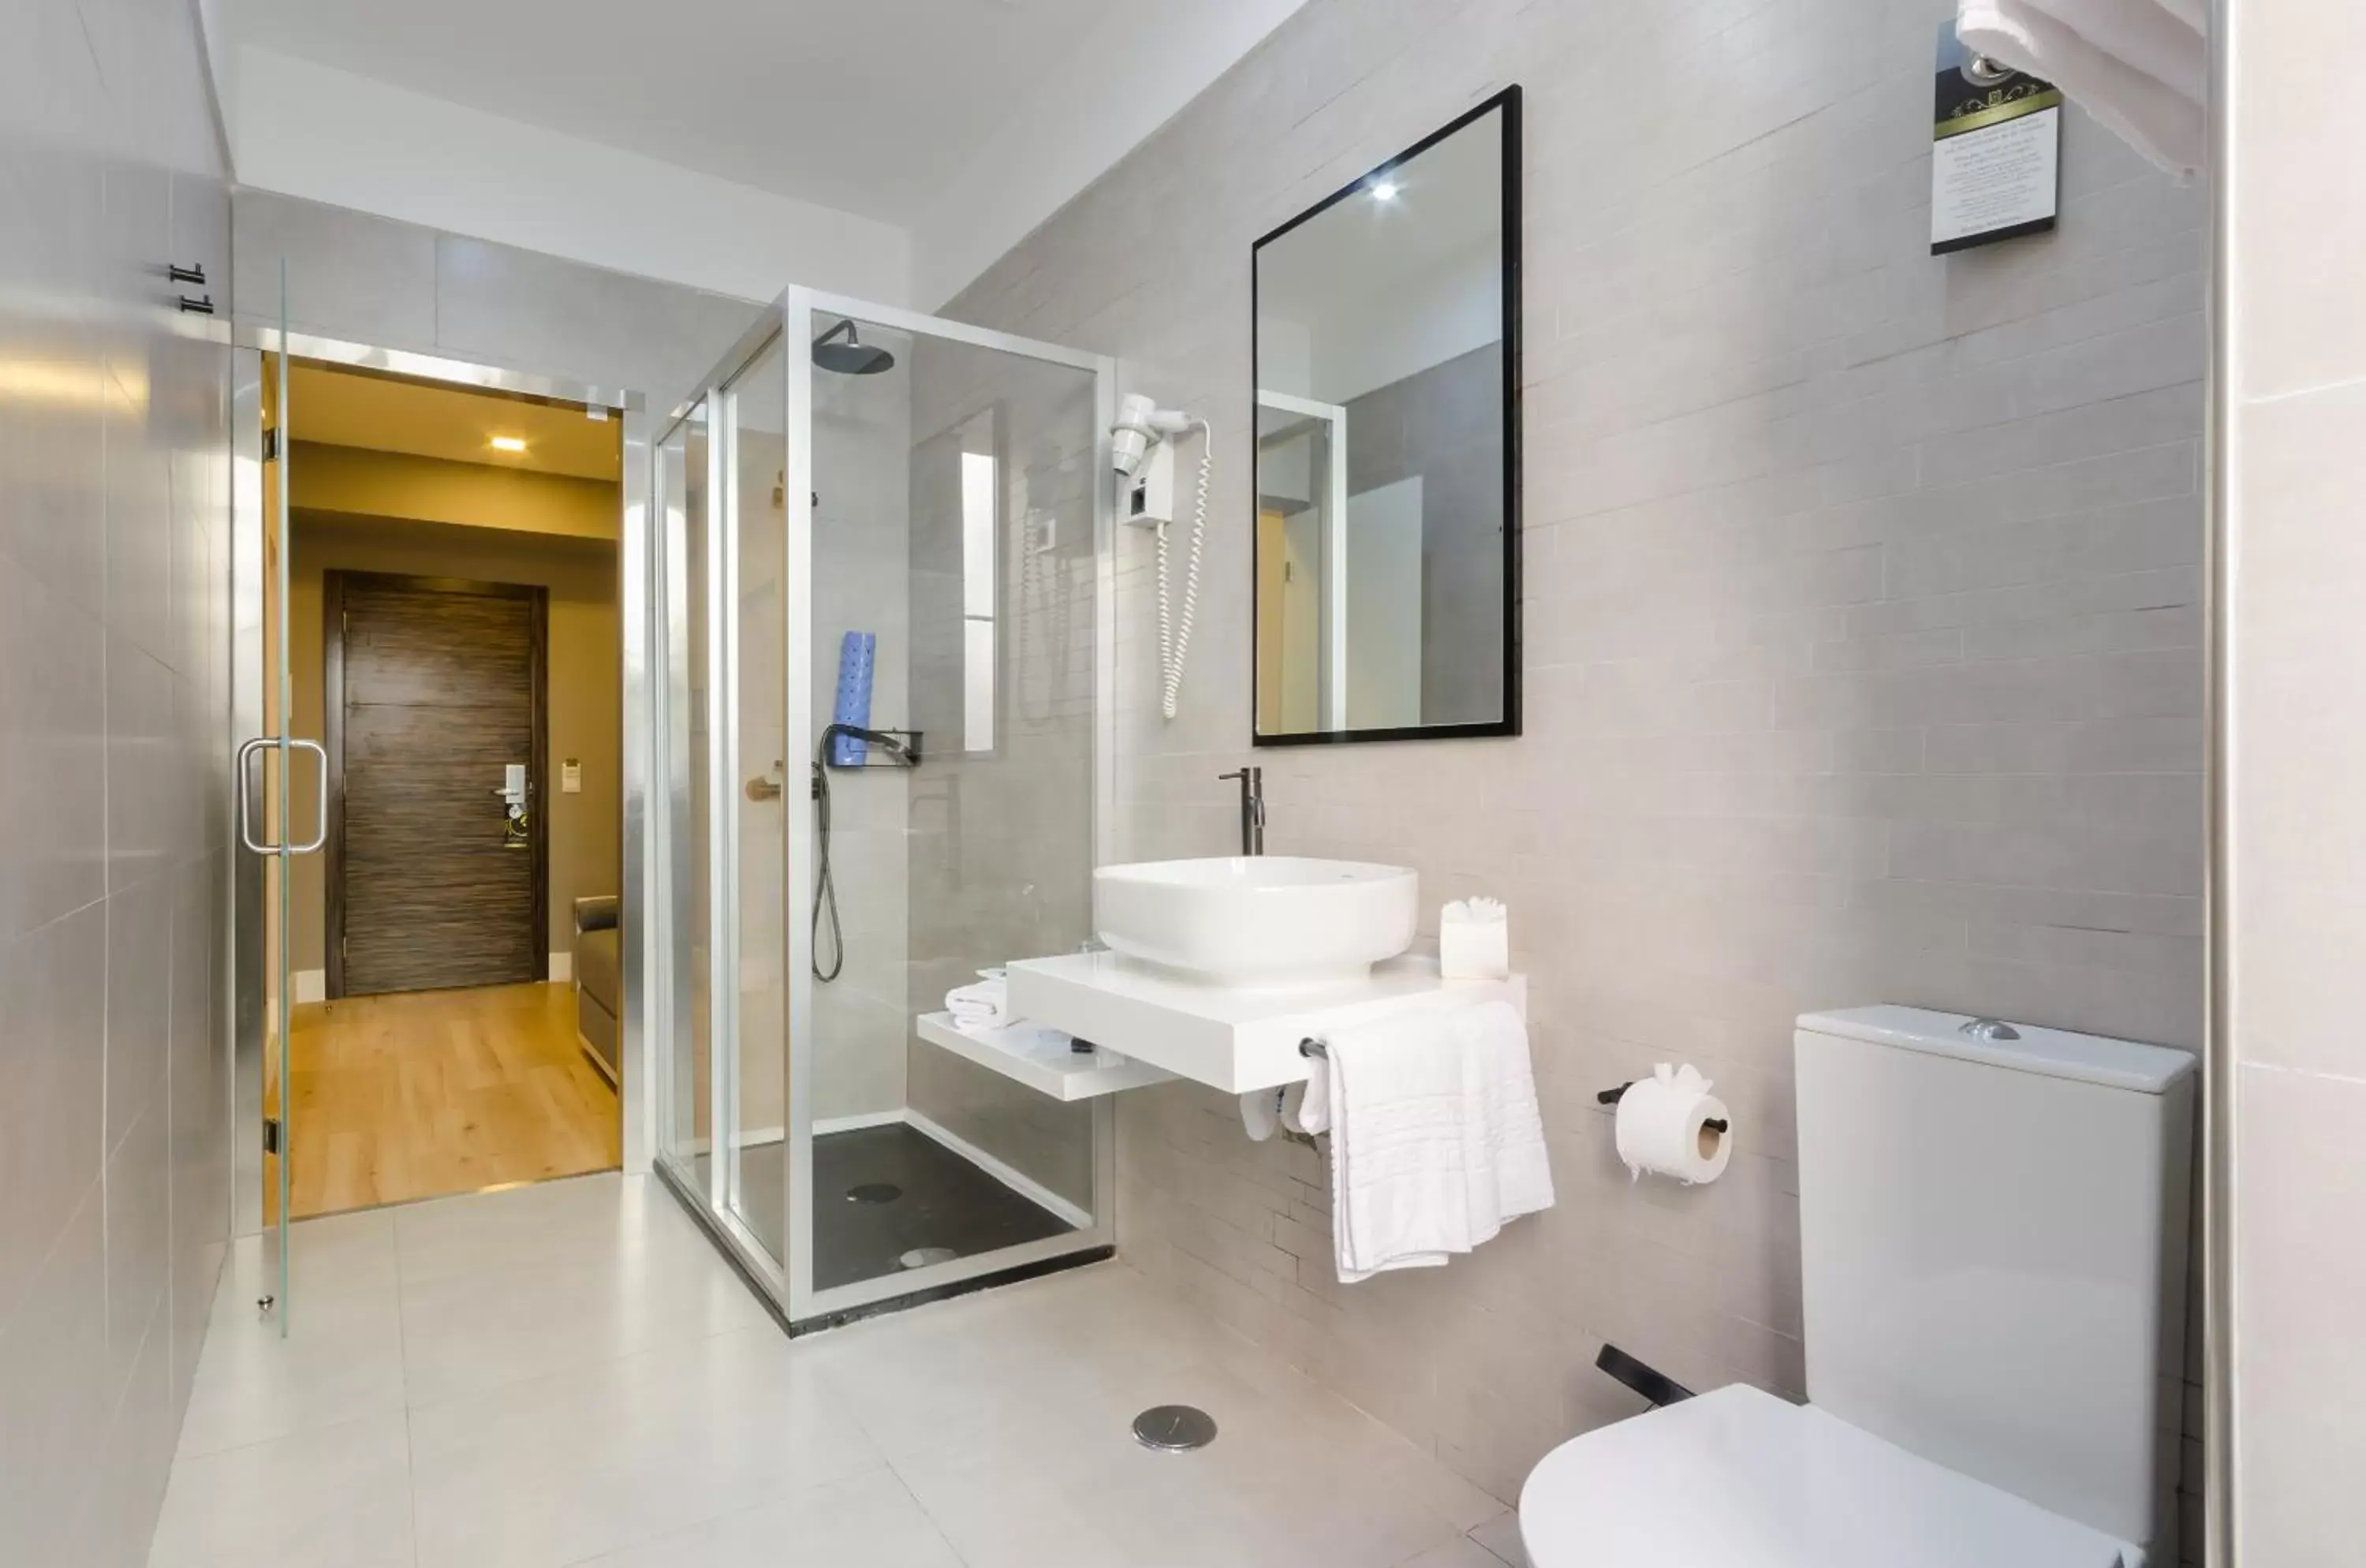 Photo of the whole room, Bathroom in Hotel Borges Chiado